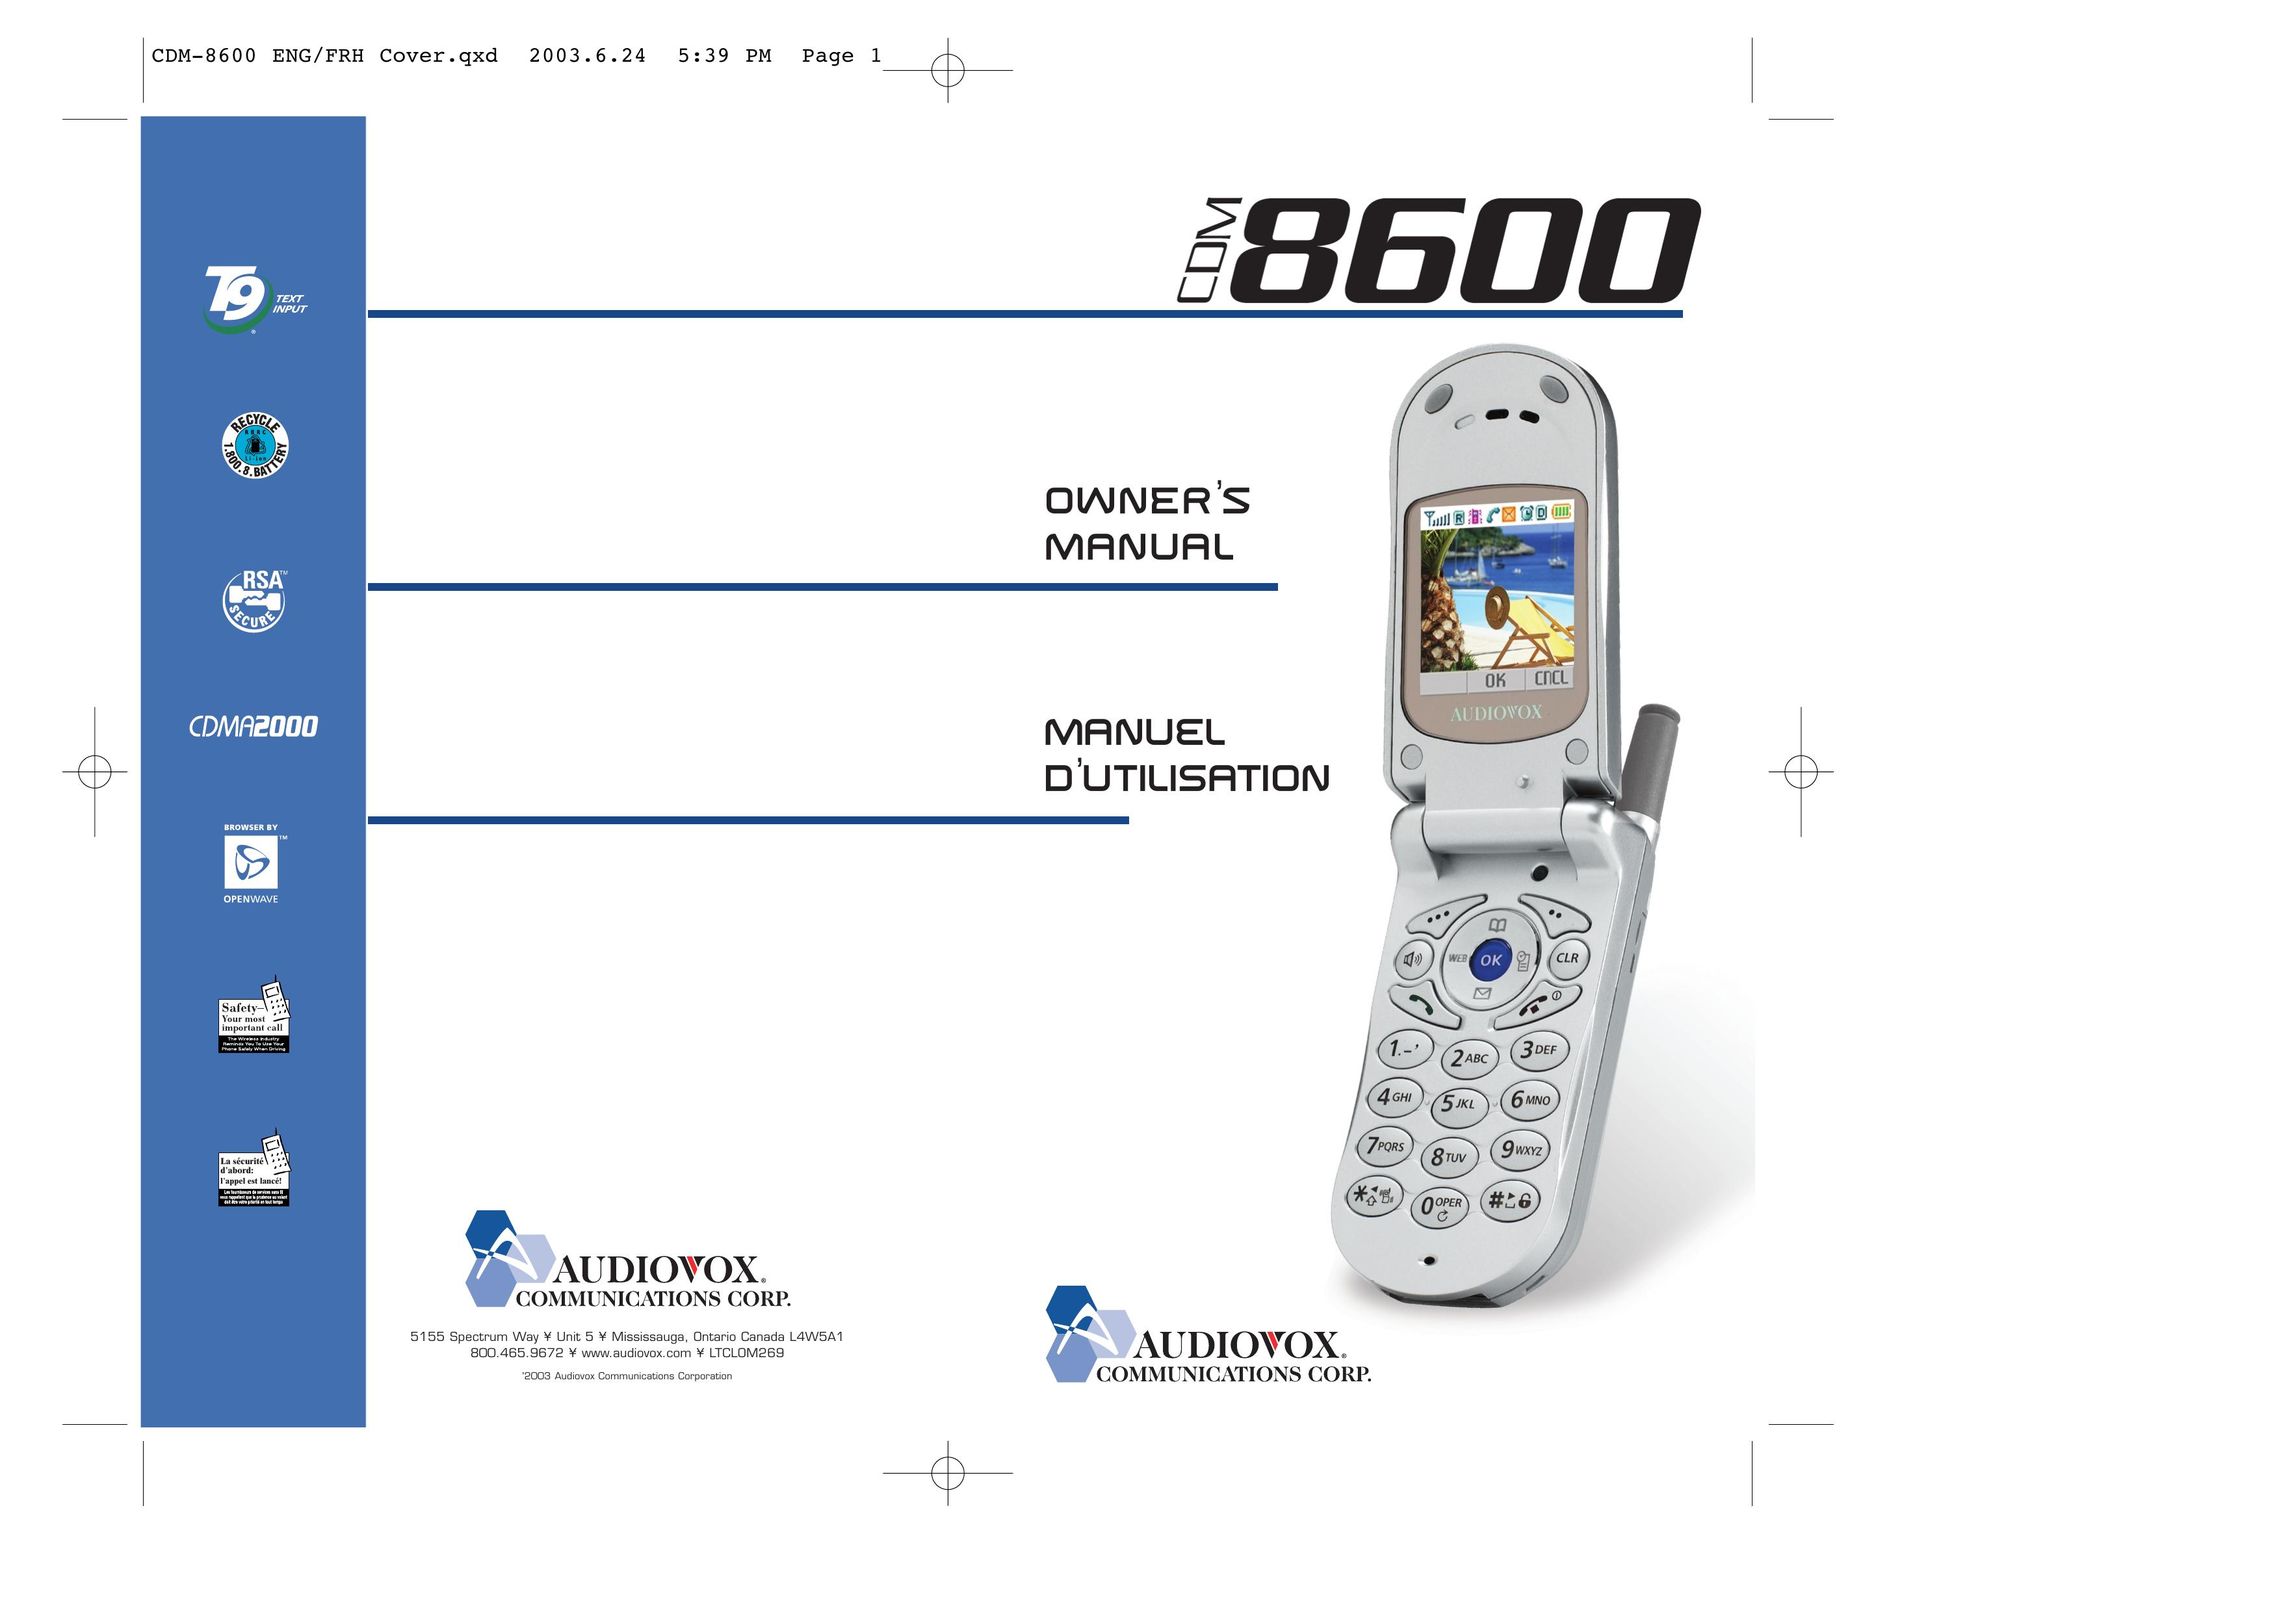 Audiovox CDM 8600 Cell Phone User Manual